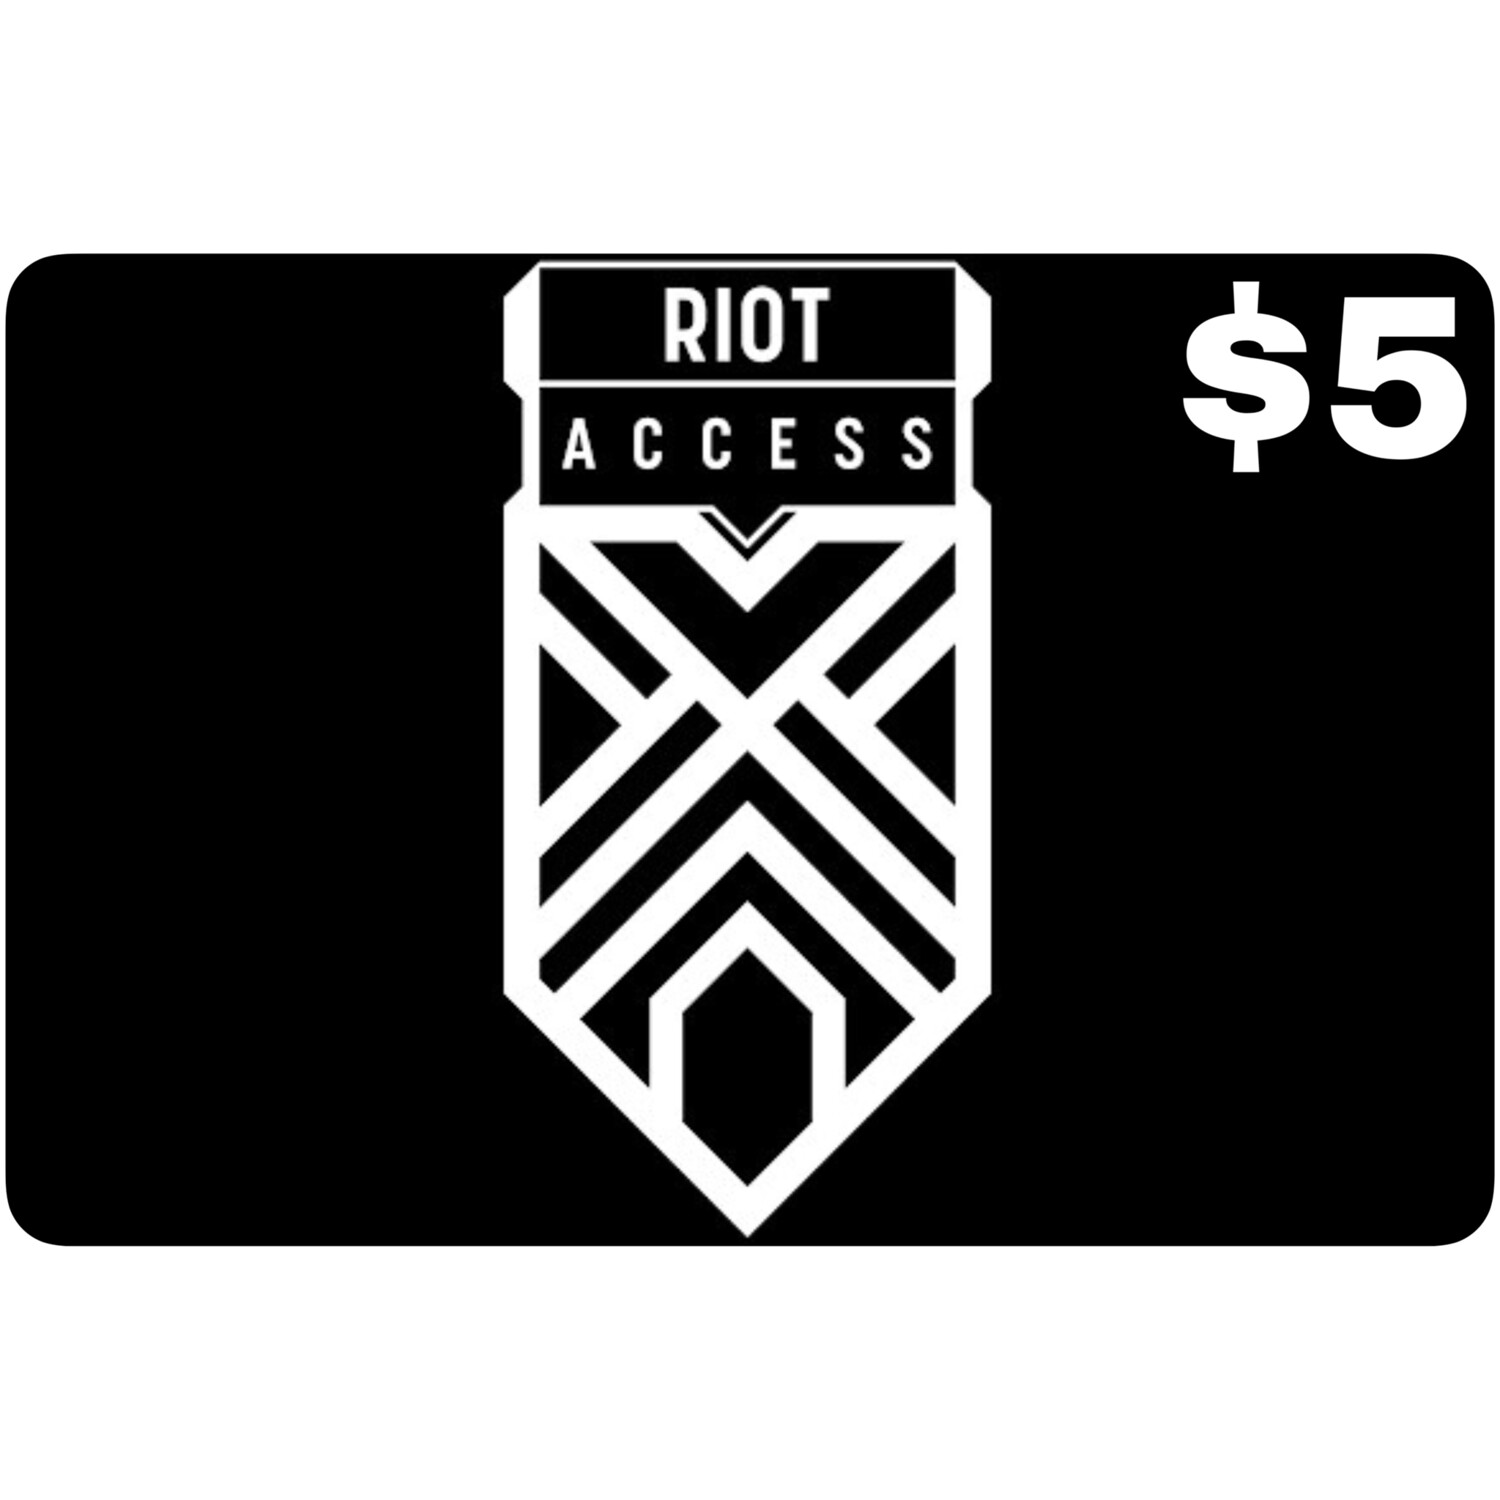 Riot Access Code $5 (NA Server)